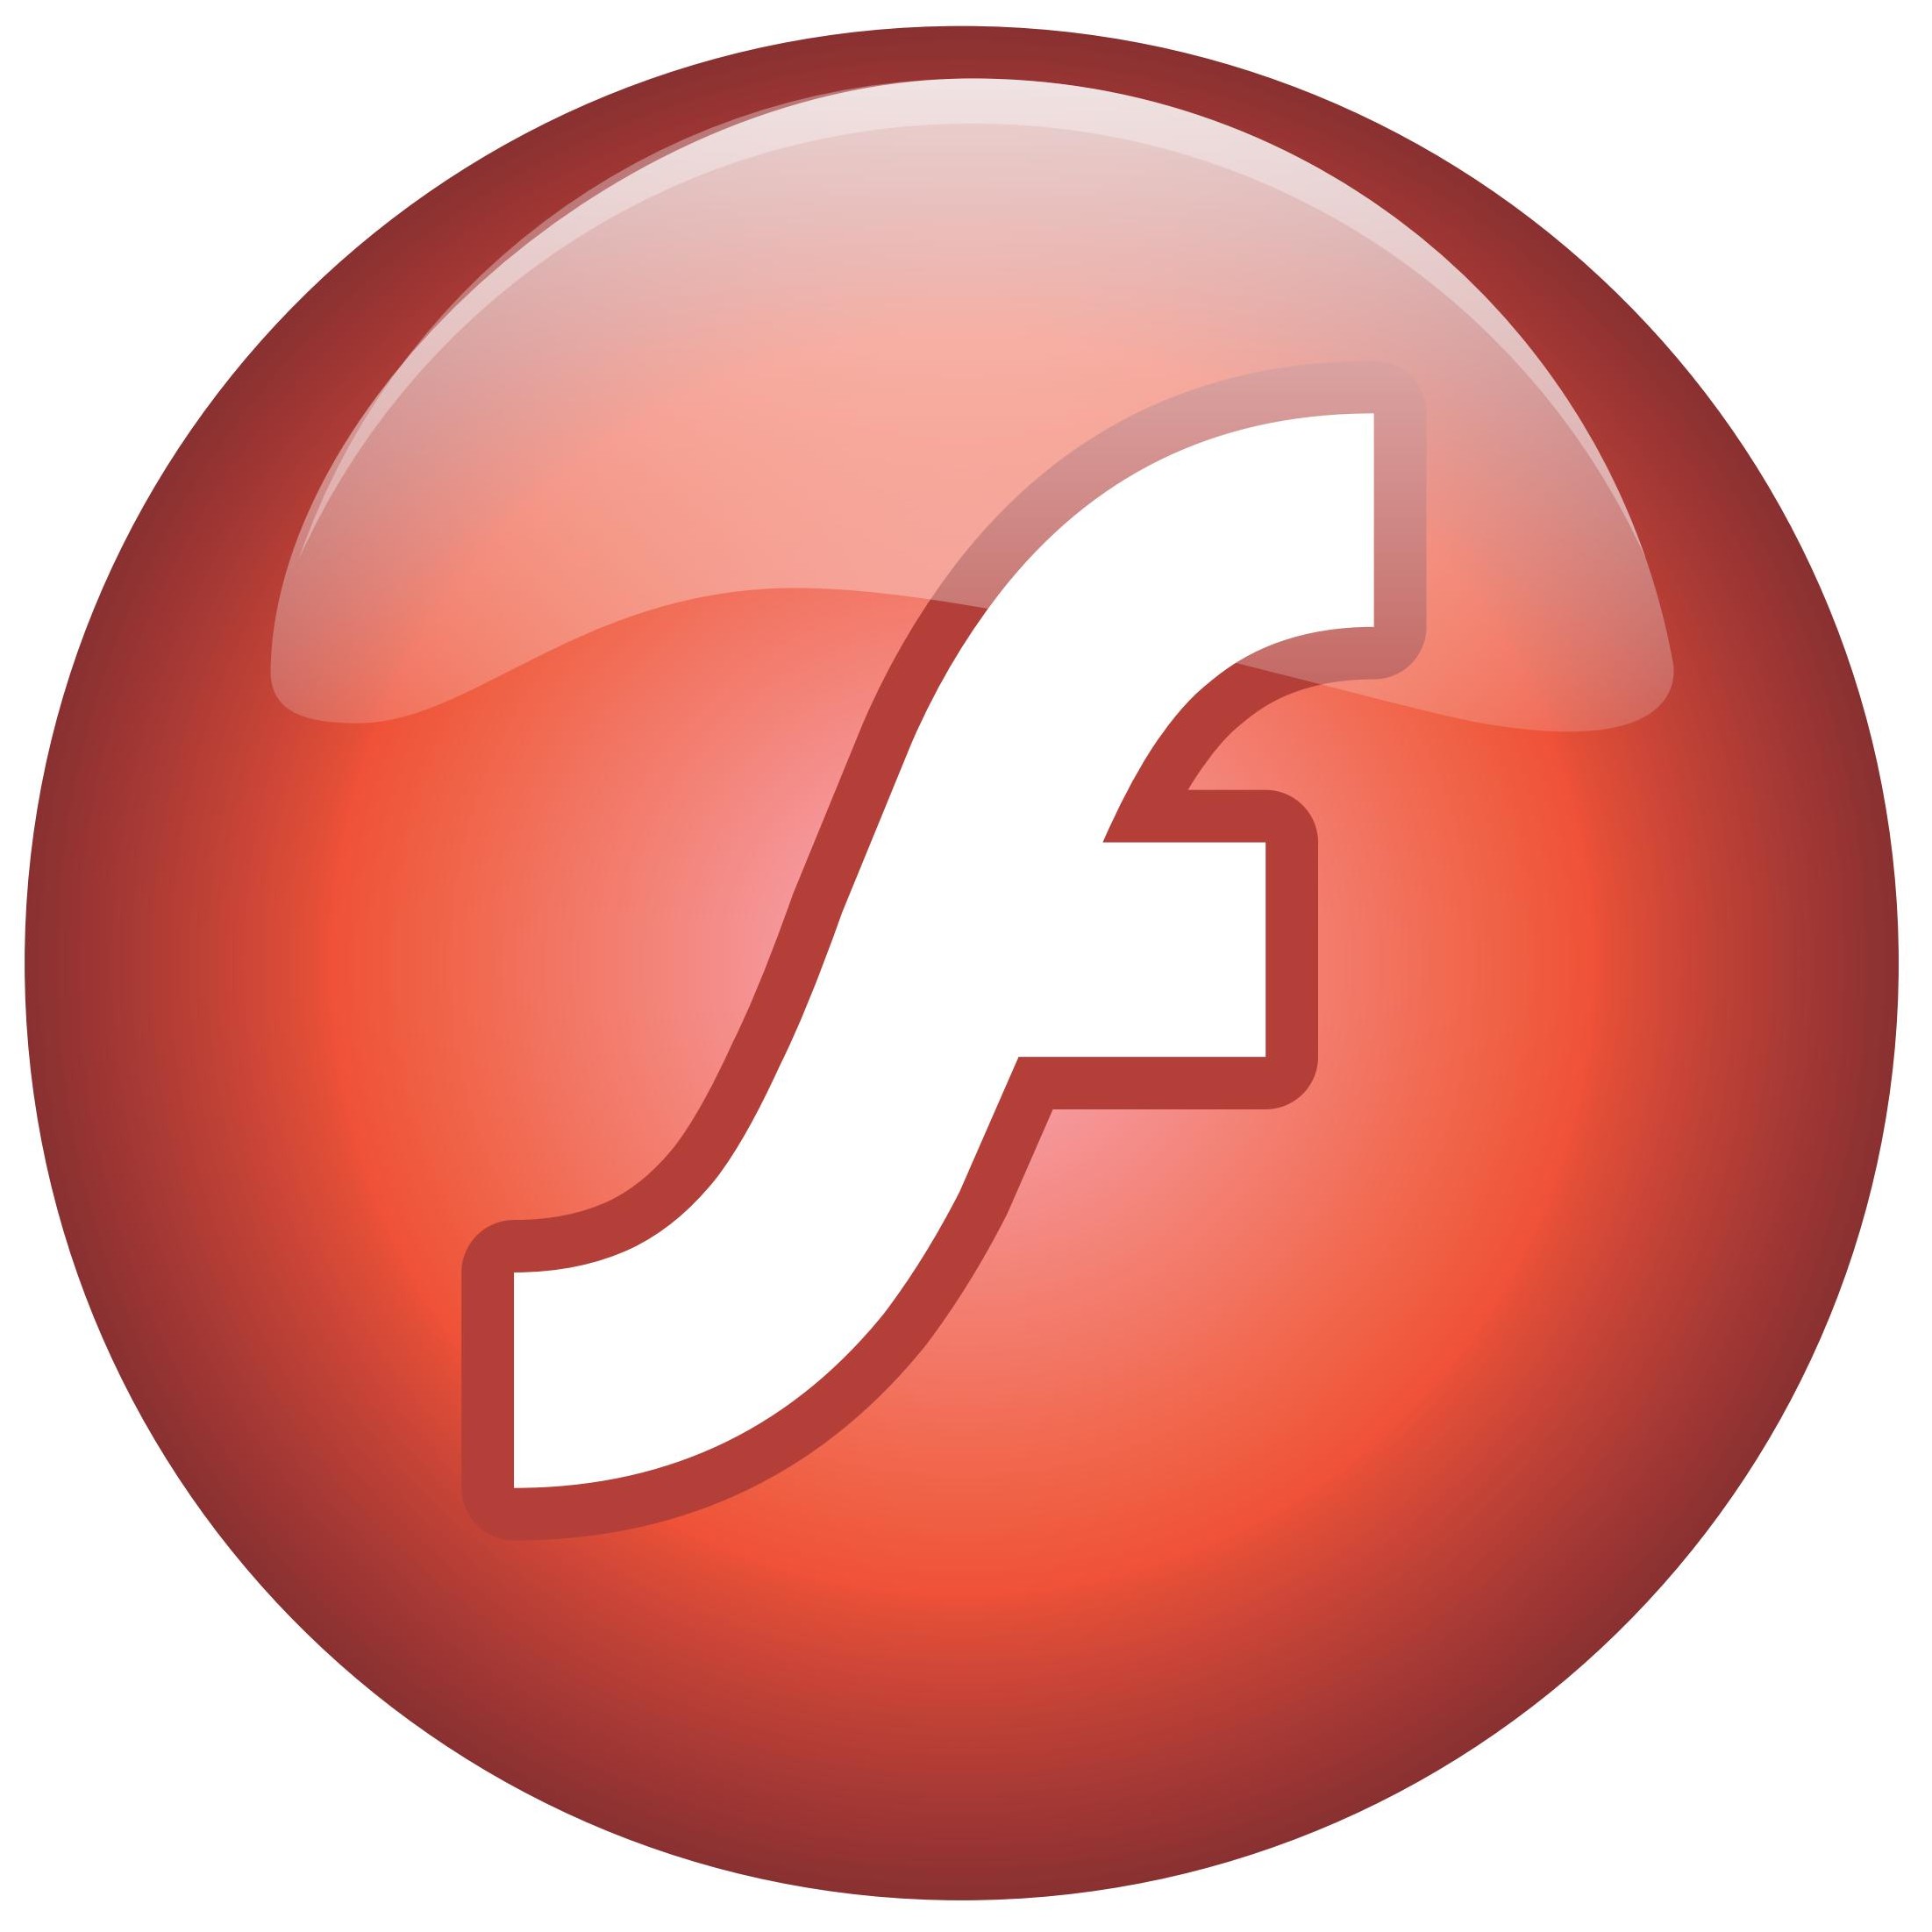 Adobe Flash 8 Vector PNG - 106803